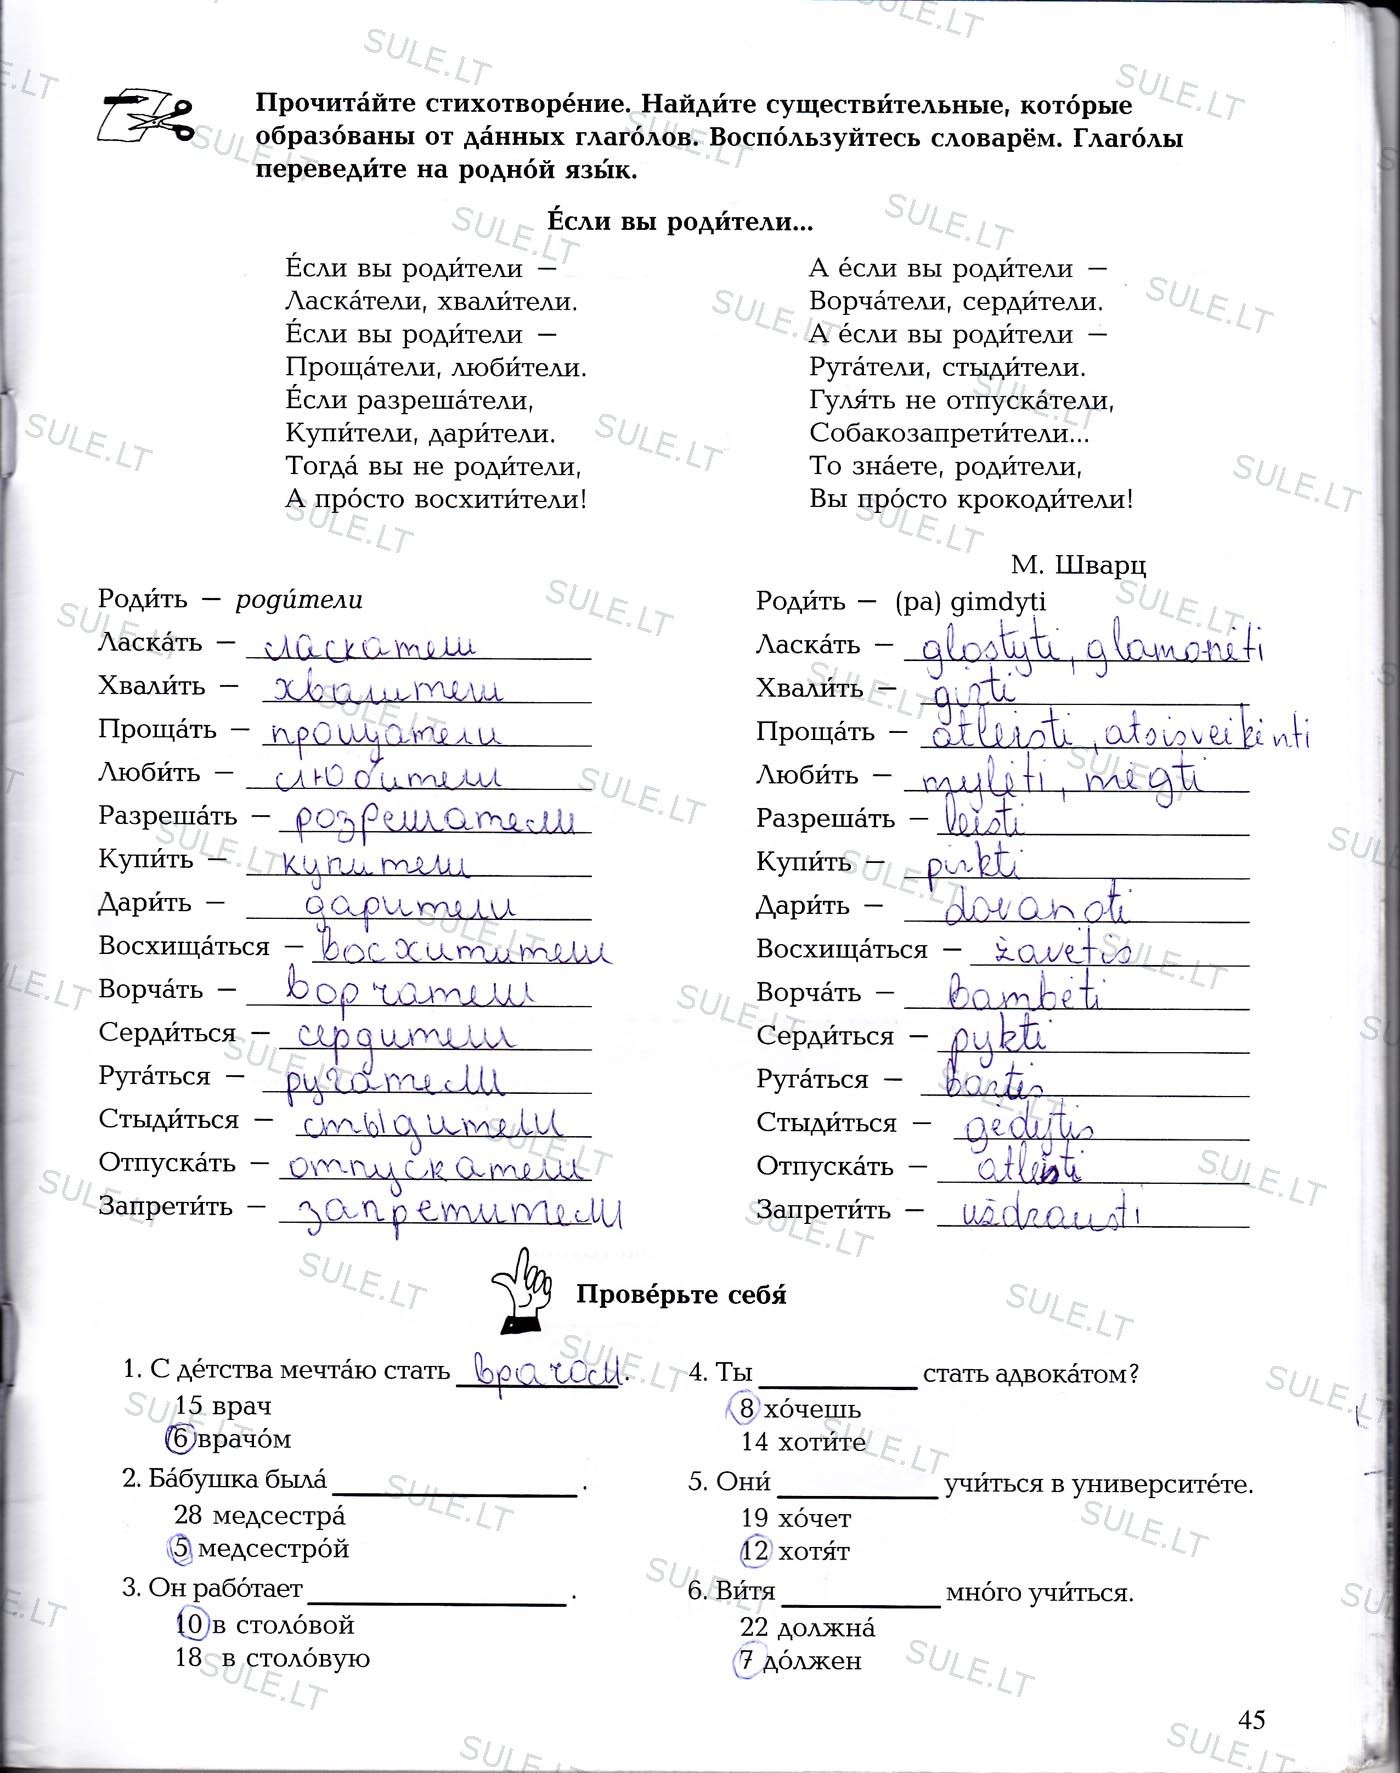 Rusų kalba ŠAG ZA ŠAGOM 2